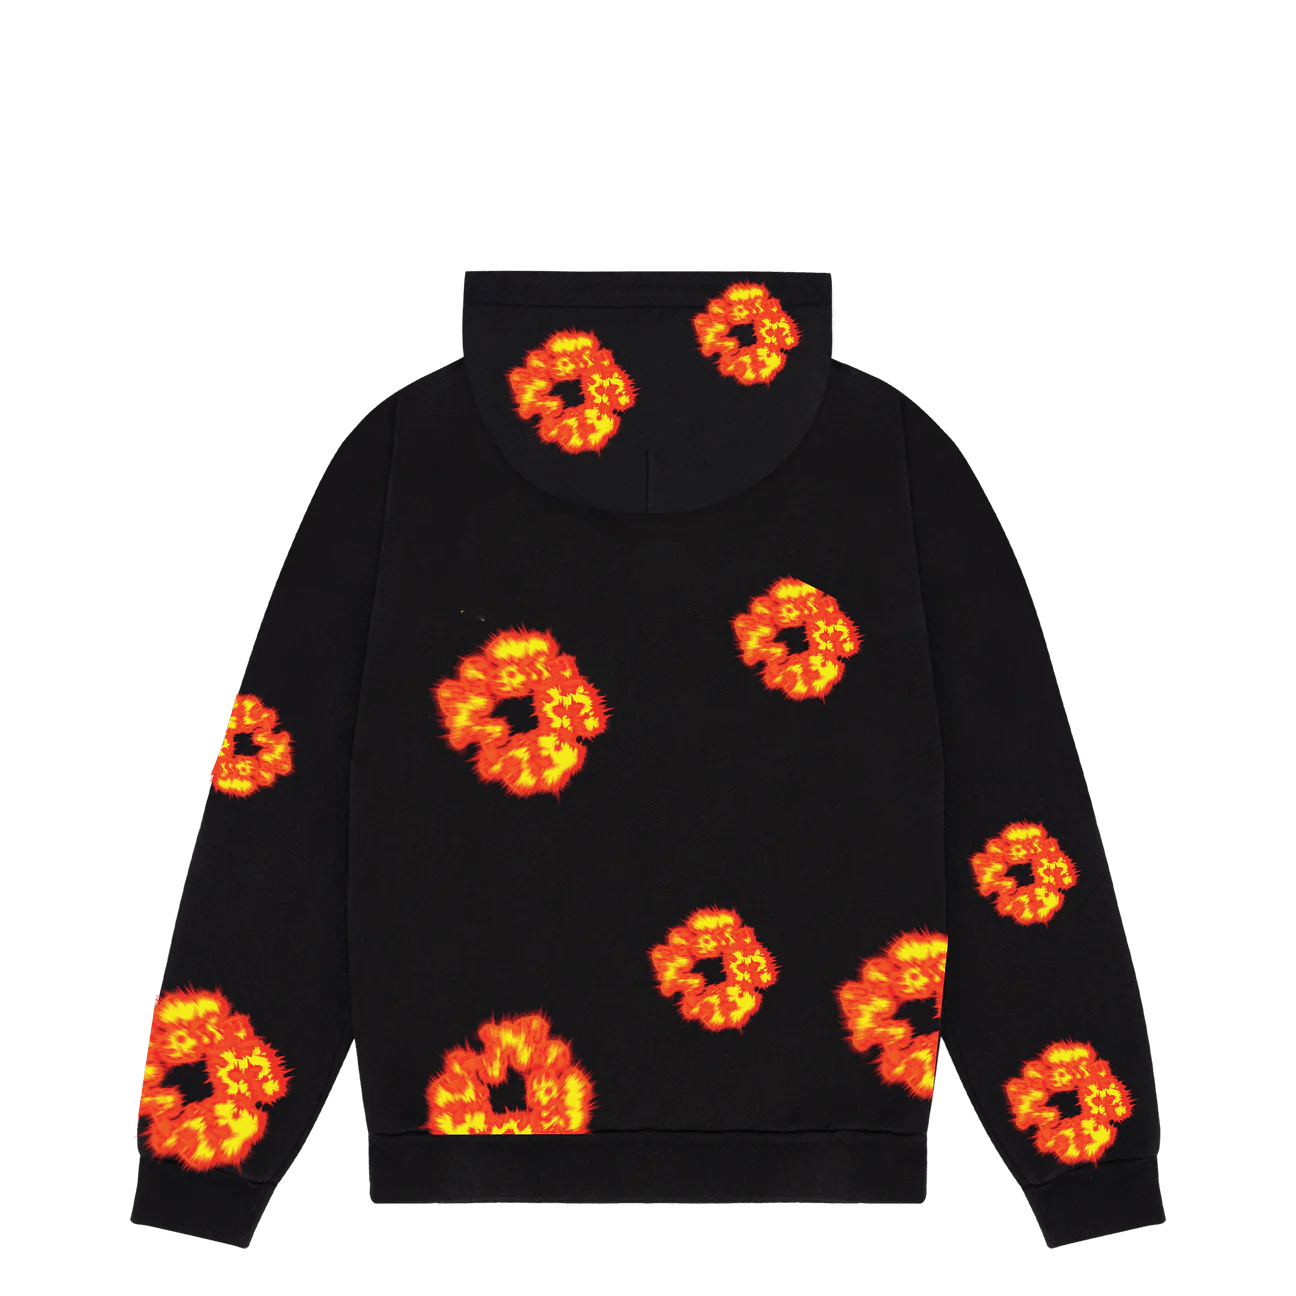 Offset Tears The Cotton Wreath Sweatshirt Black - Paroissesaintefoy Sneakers Sale Online